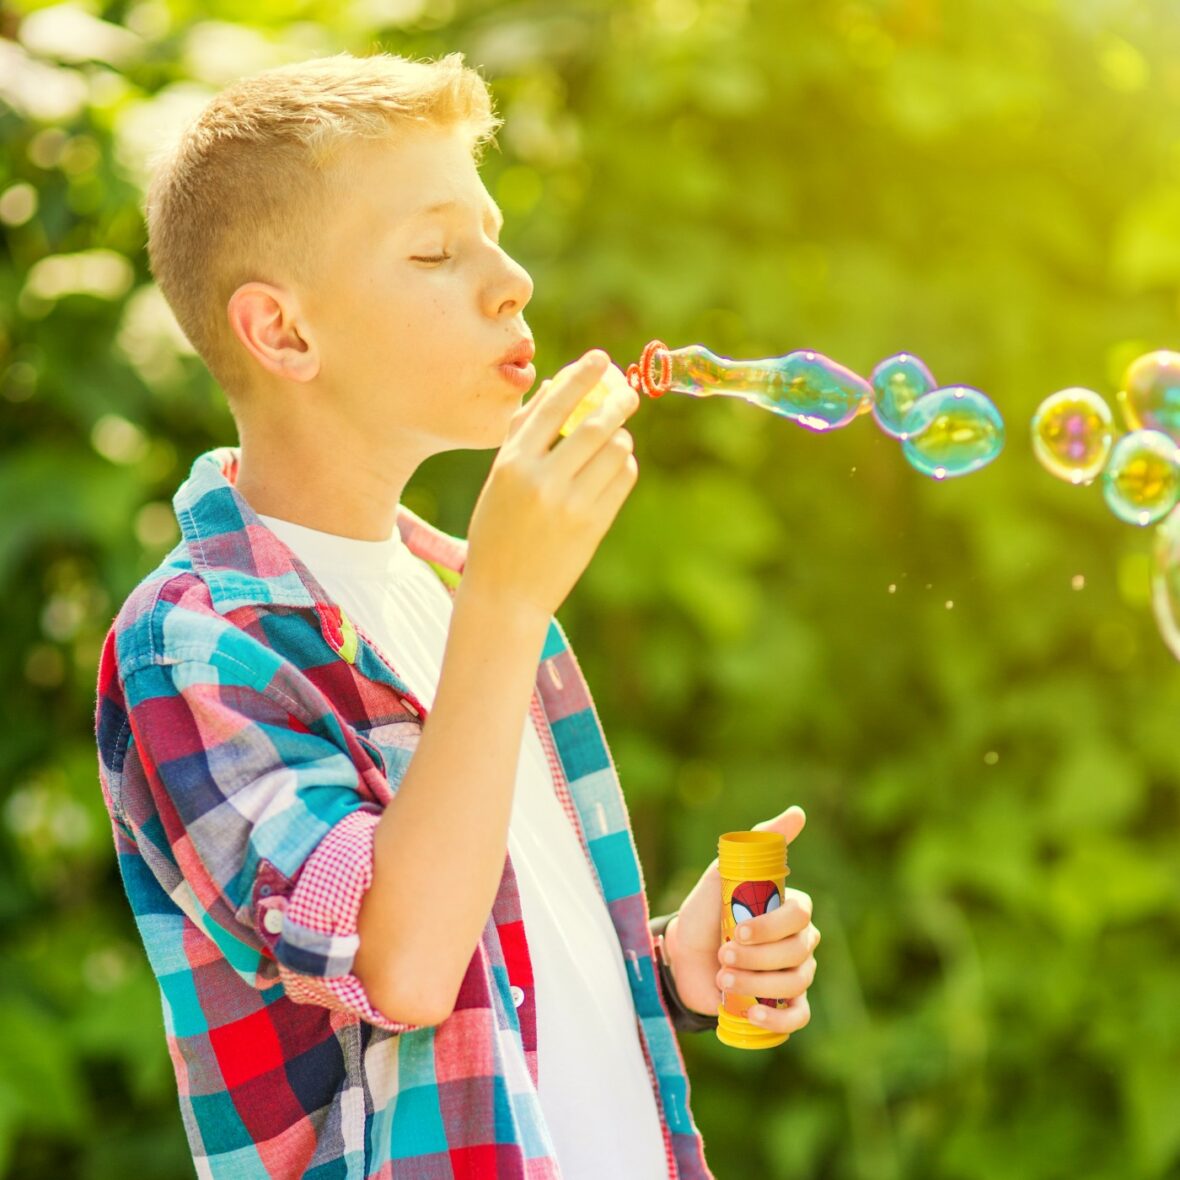 Portrait of a young boy blowing soap bubbles in a park